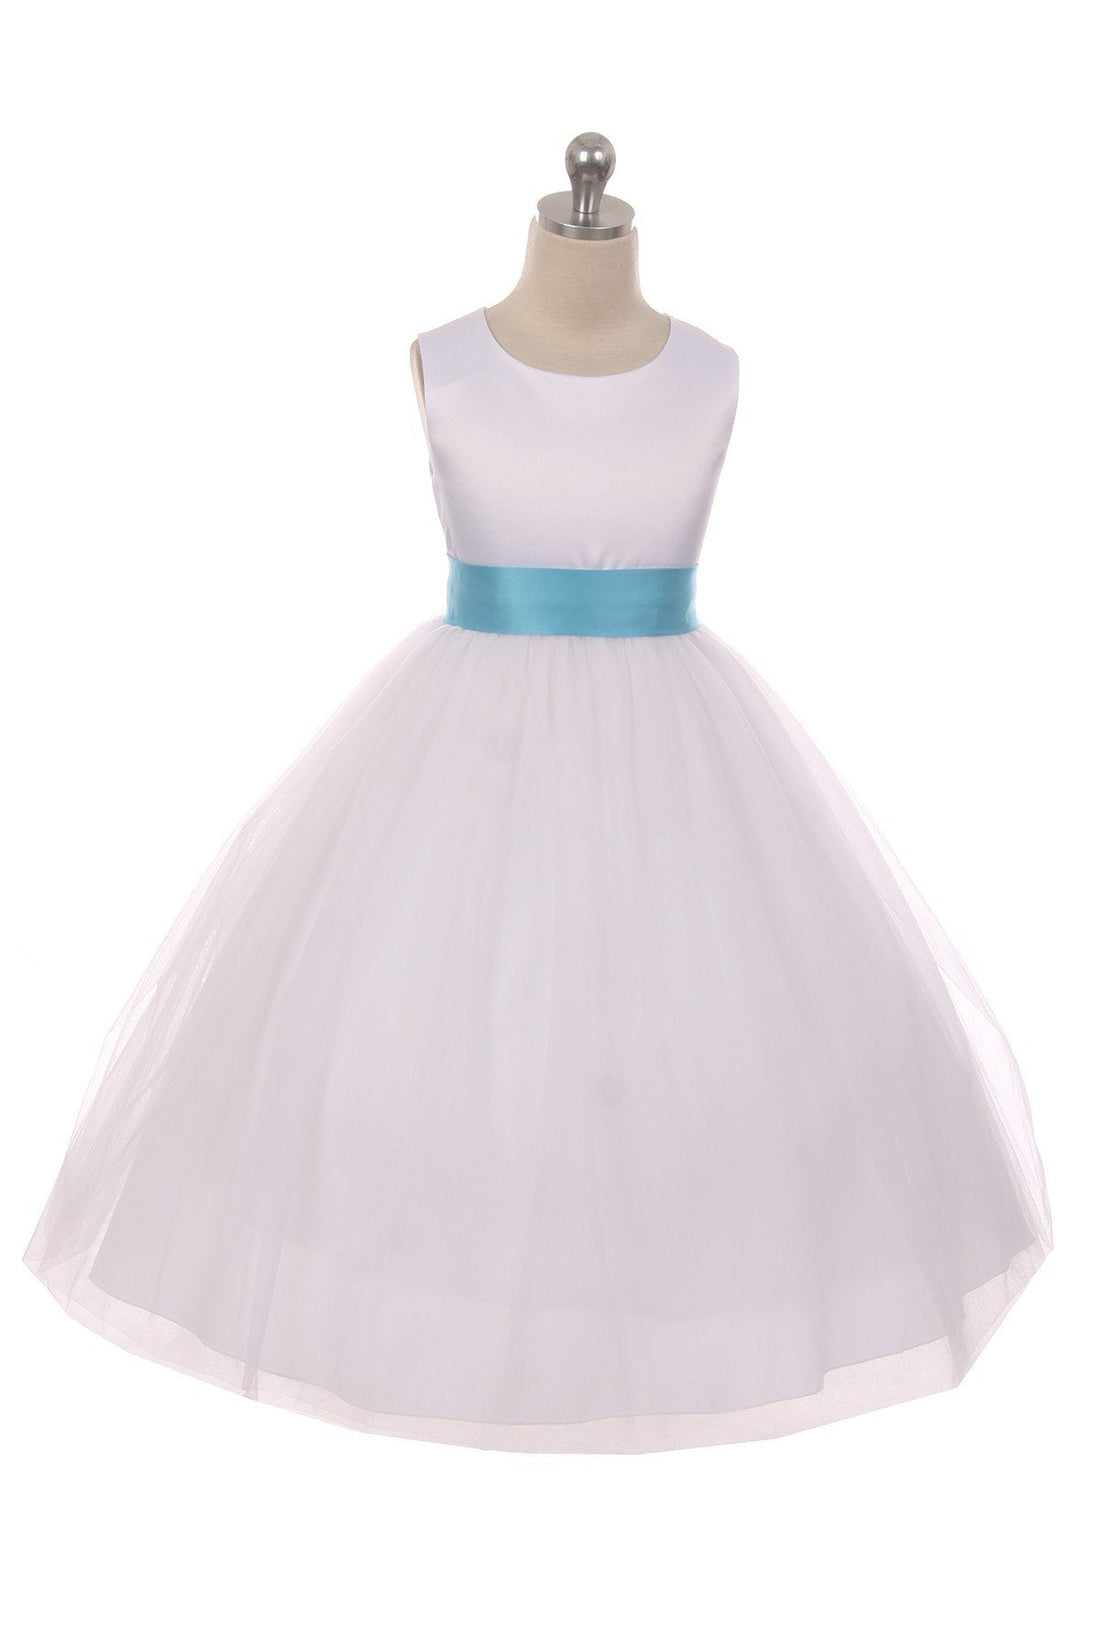 Aqua Girl Dress - Ivory Satin Sash Bow Girl Dress - AS411 Kids Dream